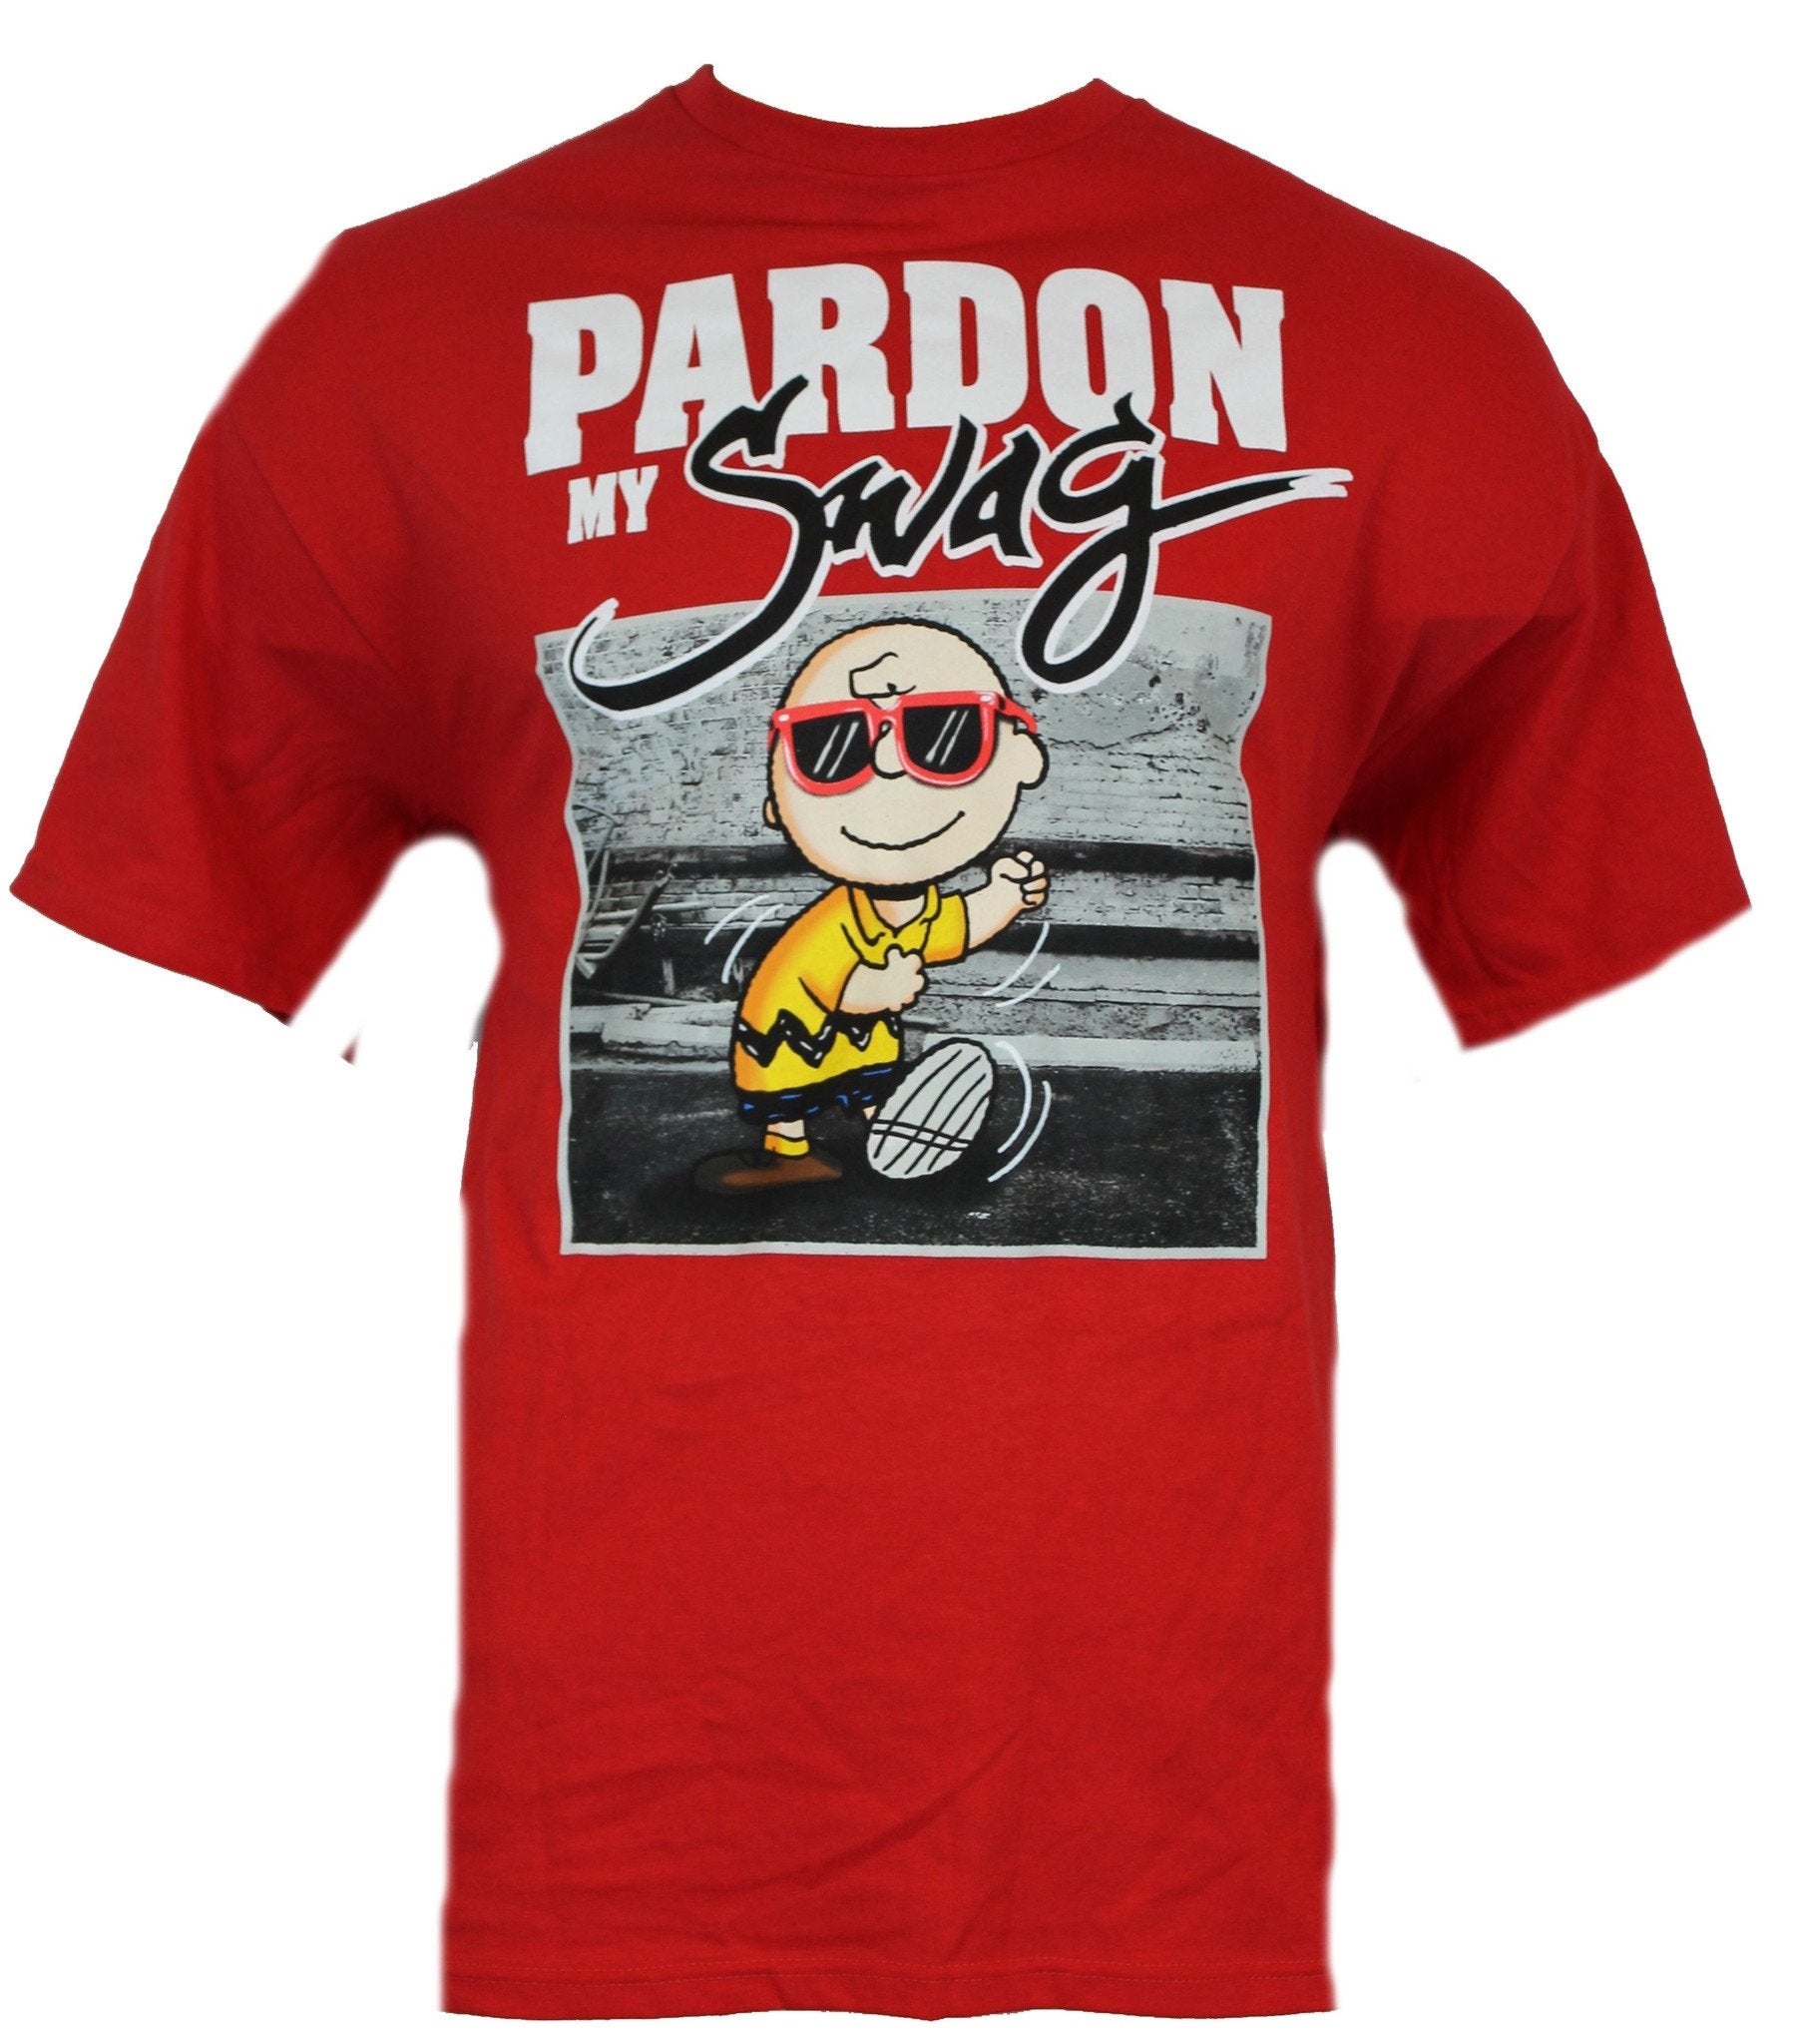 Peanuts Mens T-Shirt -  "Pardon My Swag" Dancing Charlie Brown Image